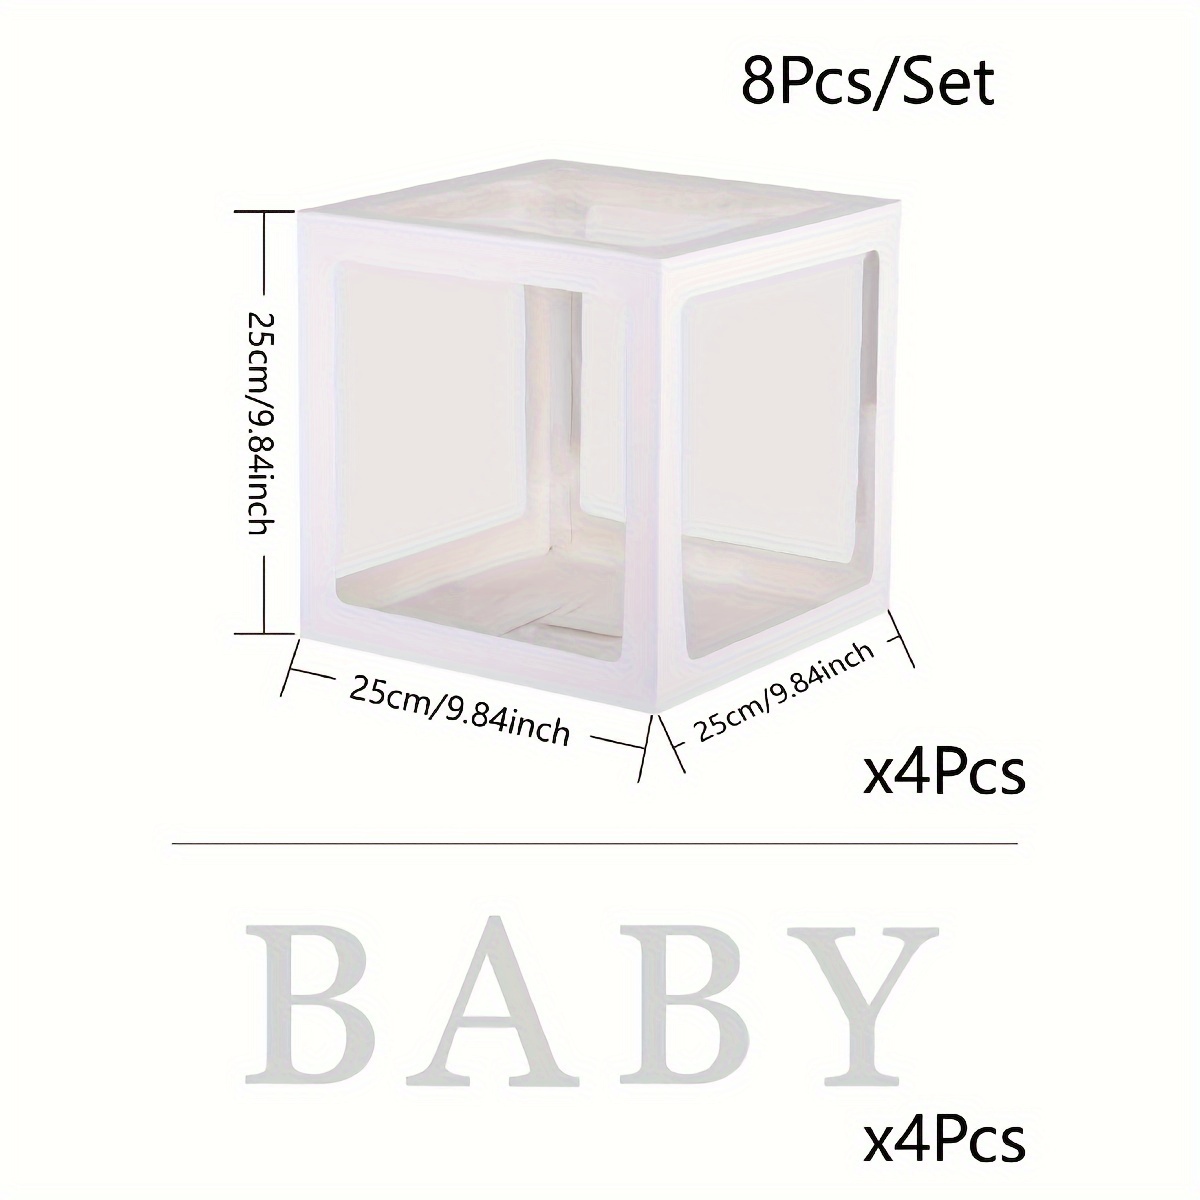 Cajas Bebés Letras Baby Shower, Bloques Cajas Globos Transparentes